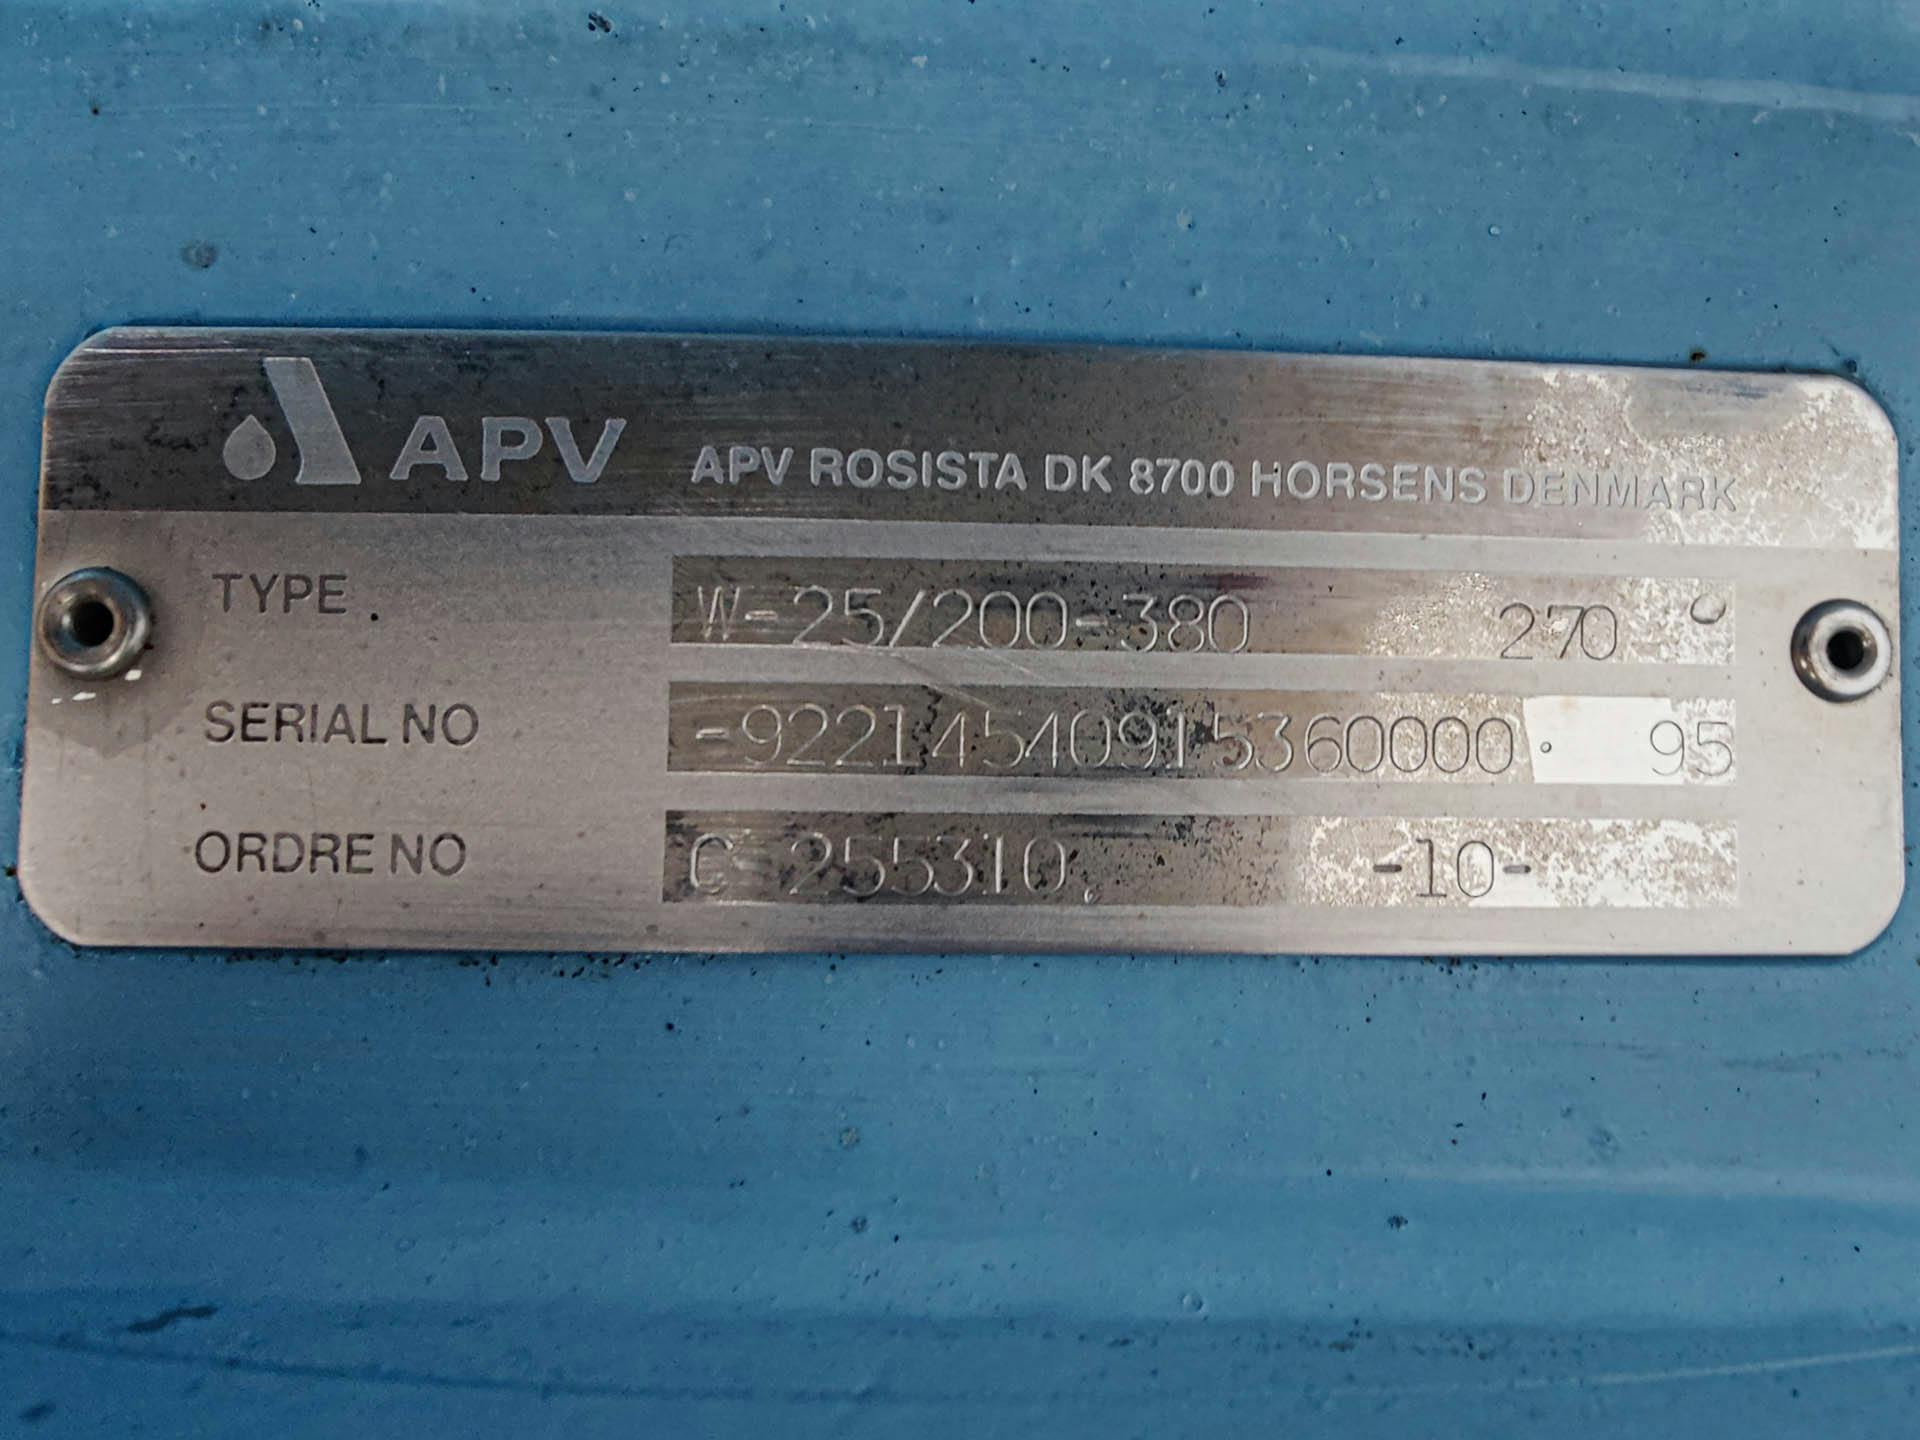 APV Rosista W-25/200-380 - Kreiselpumpe - image 6